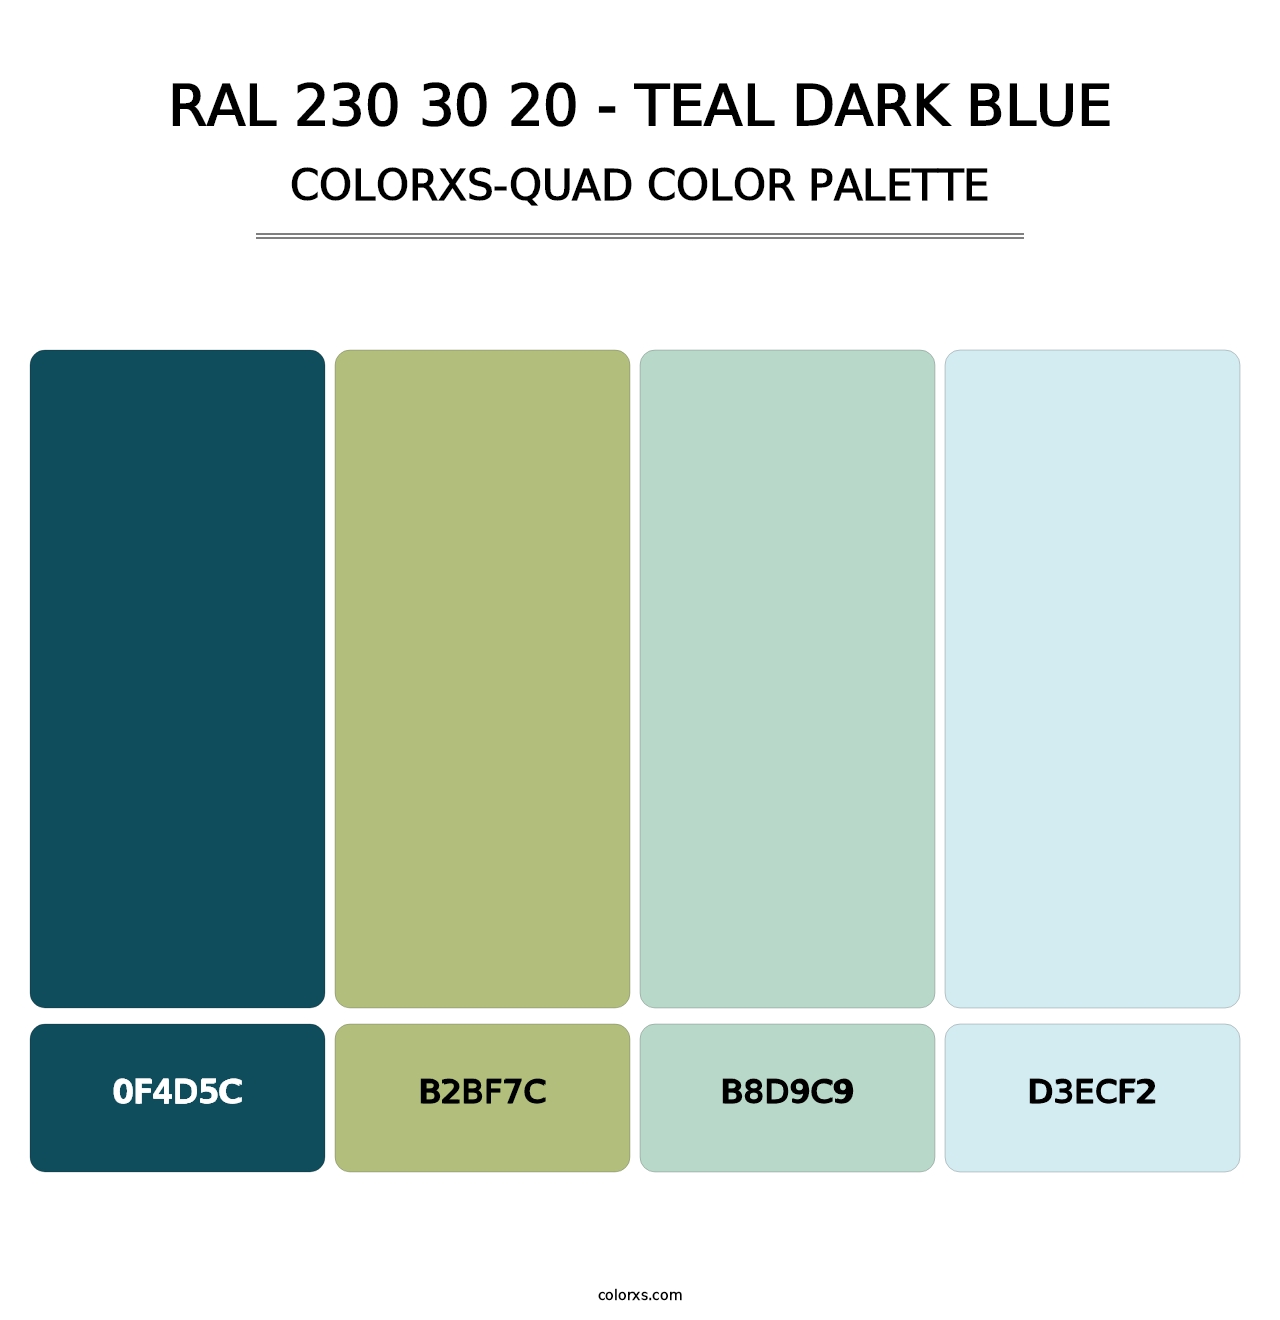 RAL 230 30 20 - Teal Dark Blue - Colorxs Quad Palette